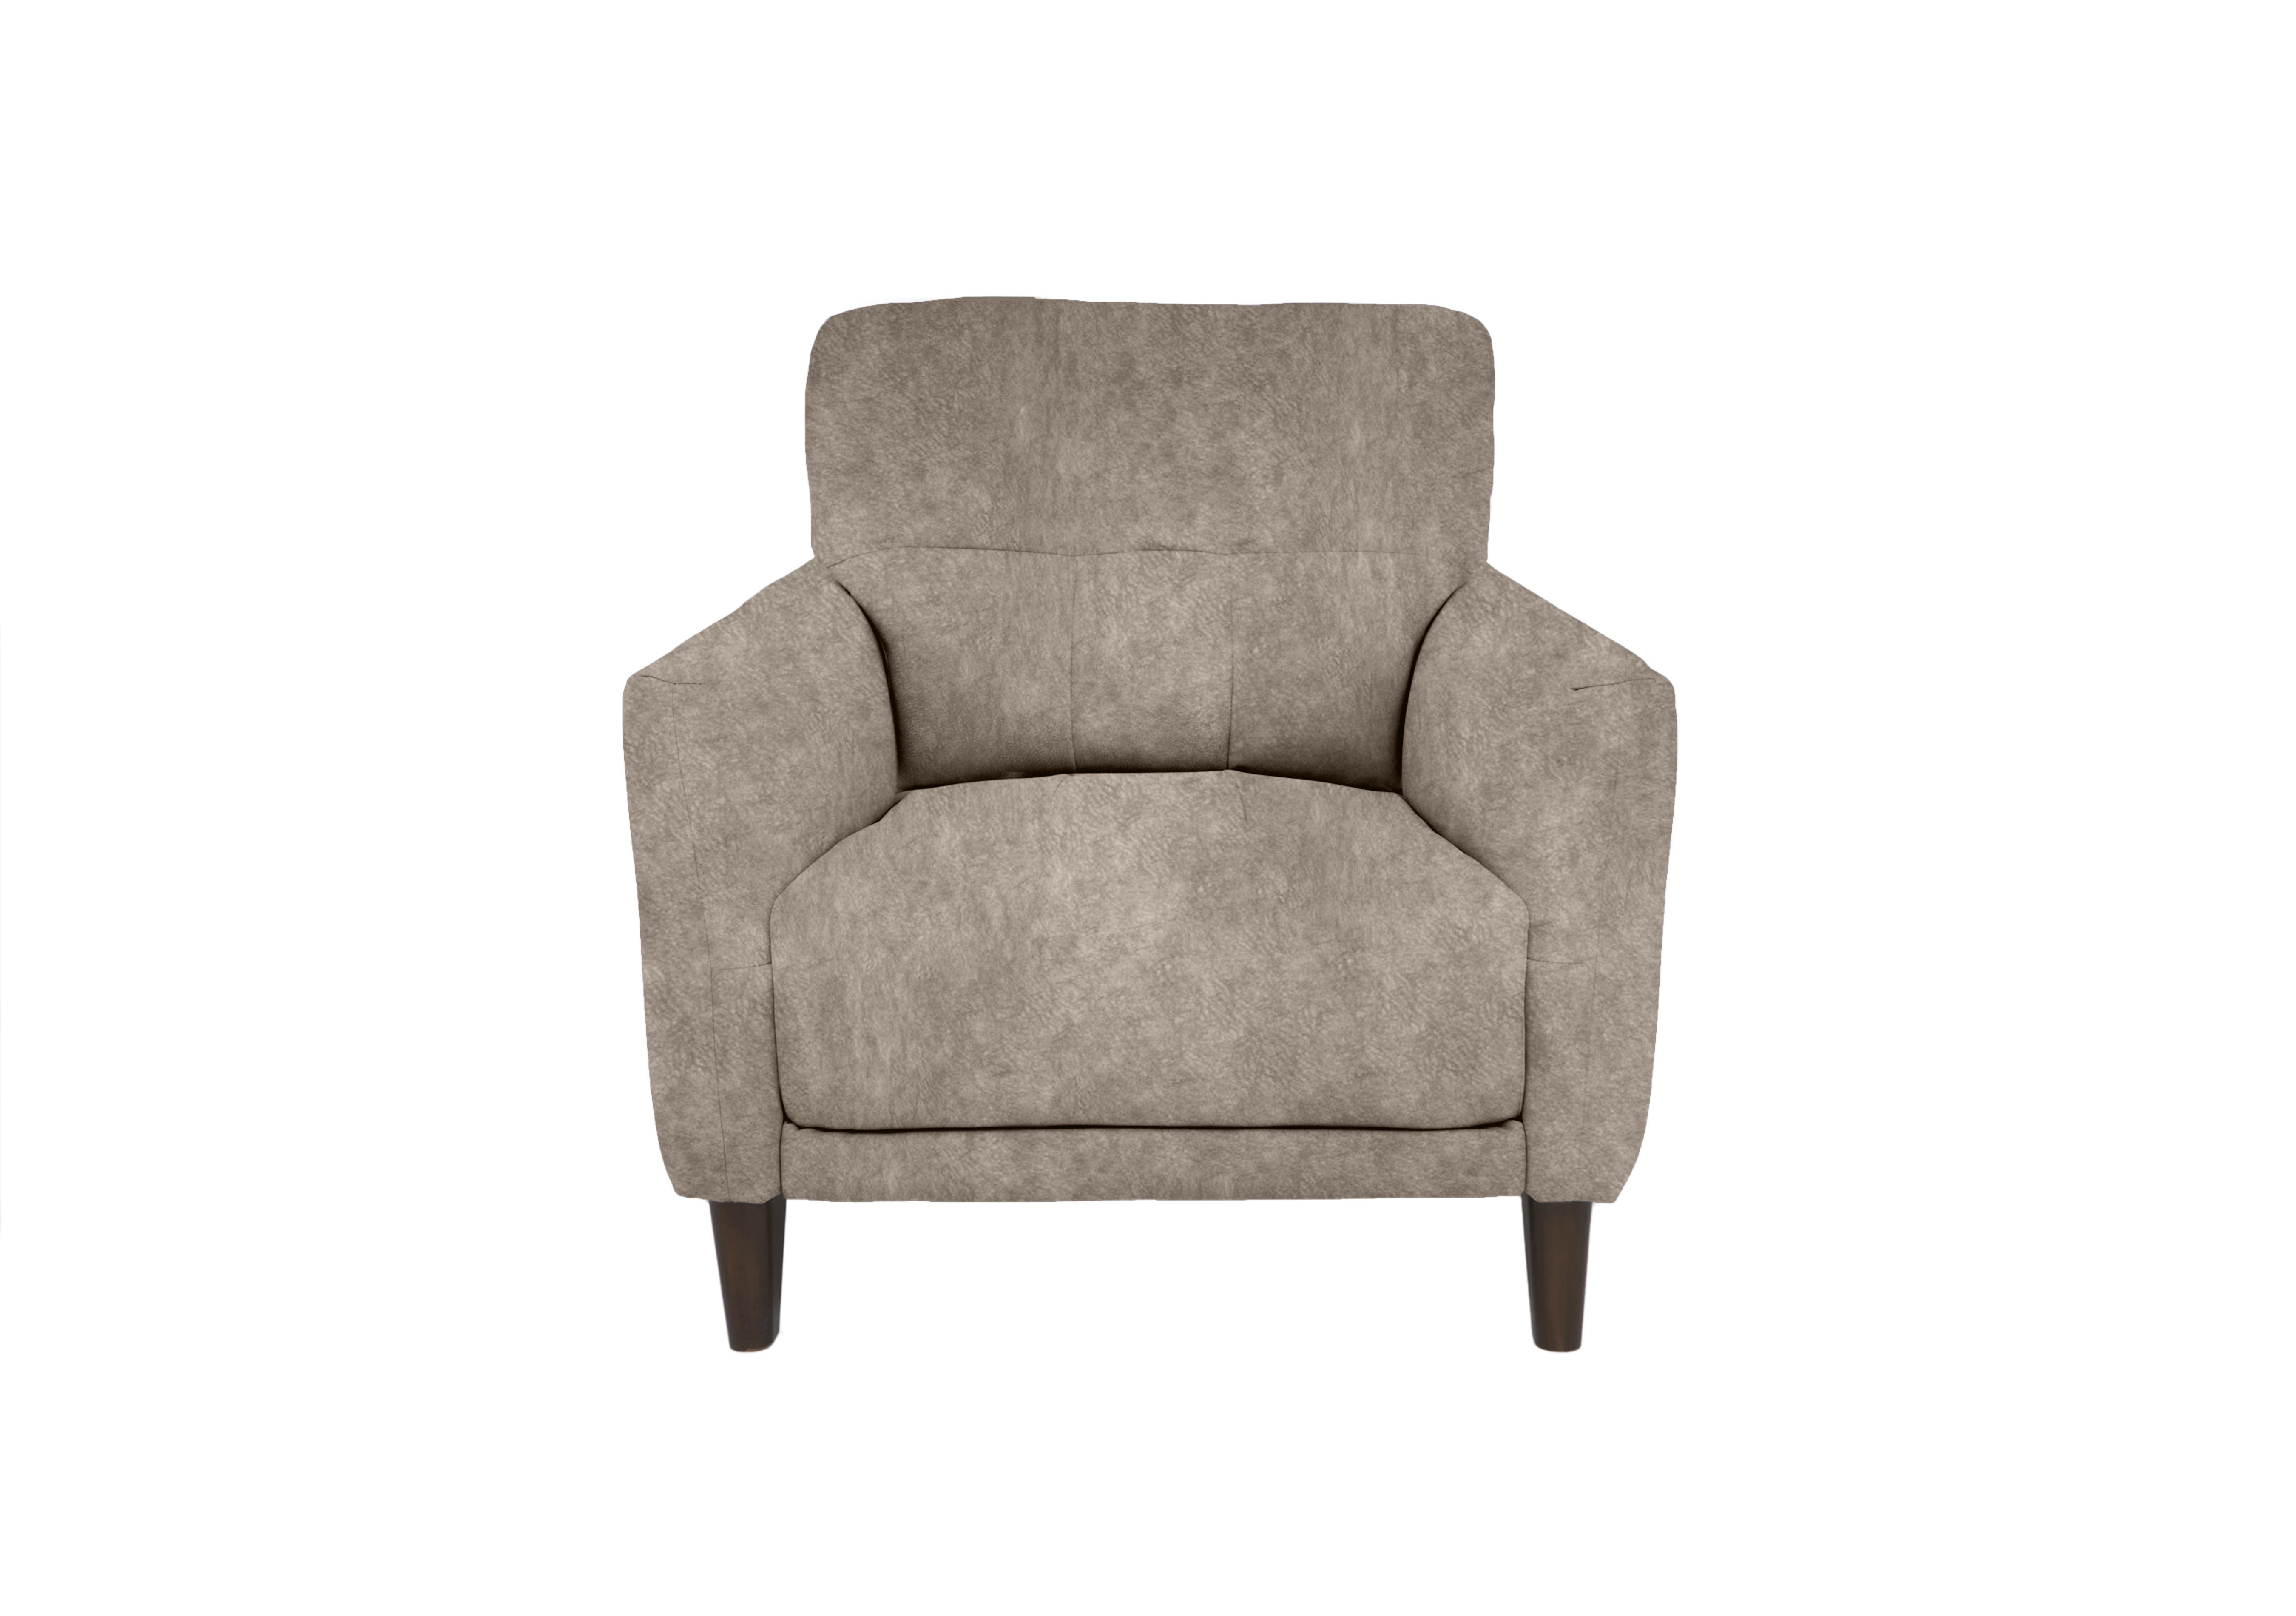 Uno Fabric Chair in Bfa-Bnn-R29 Mink on Furniture Village